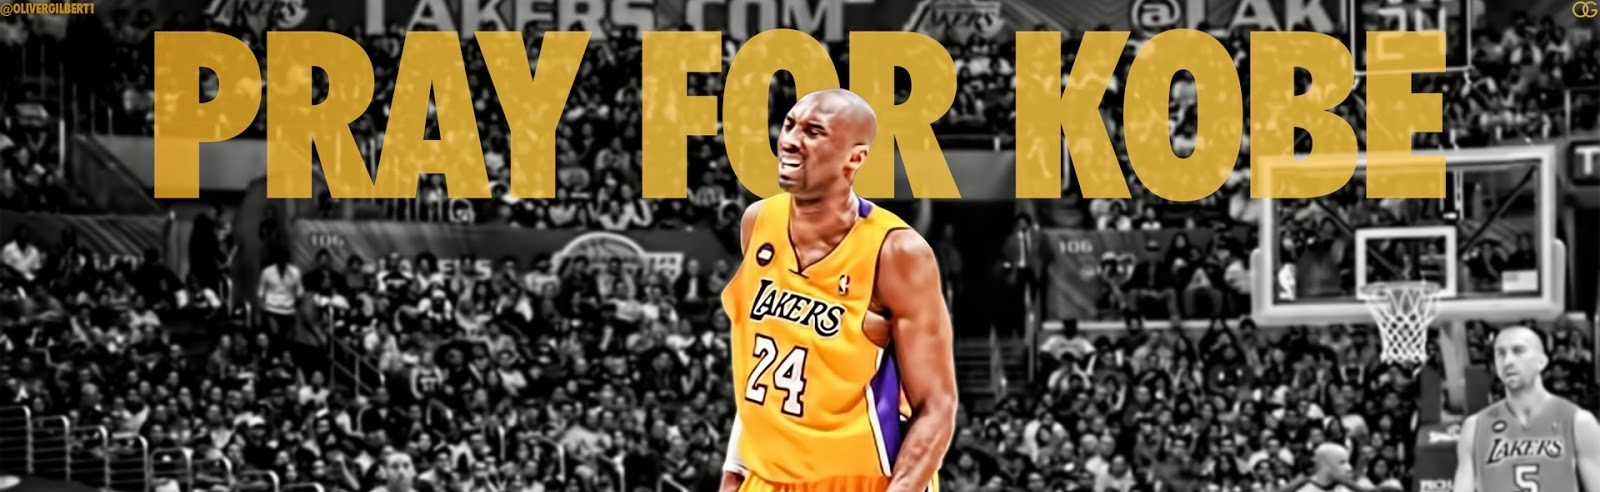 Pray for Kobe